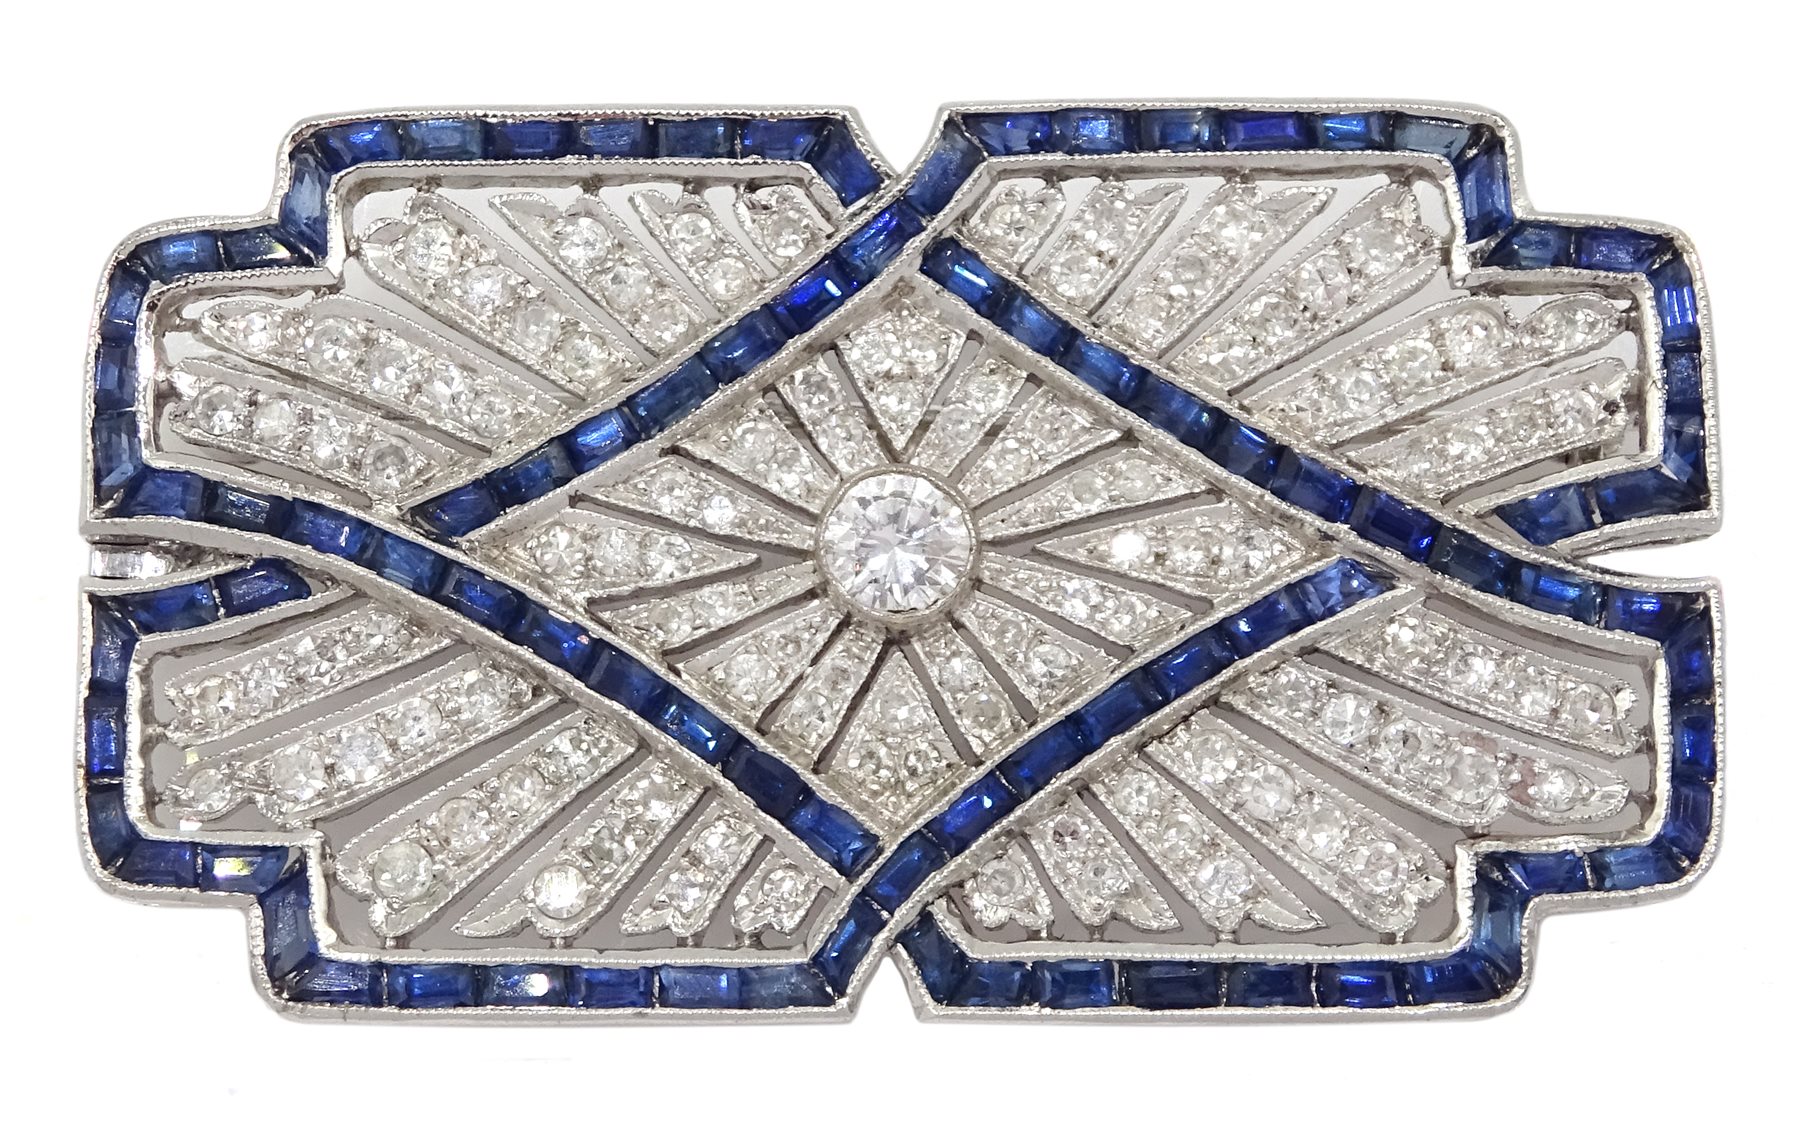 White gold calibre cut sapphire and diamond brooch, milgrain set in open work design, stamped 18K